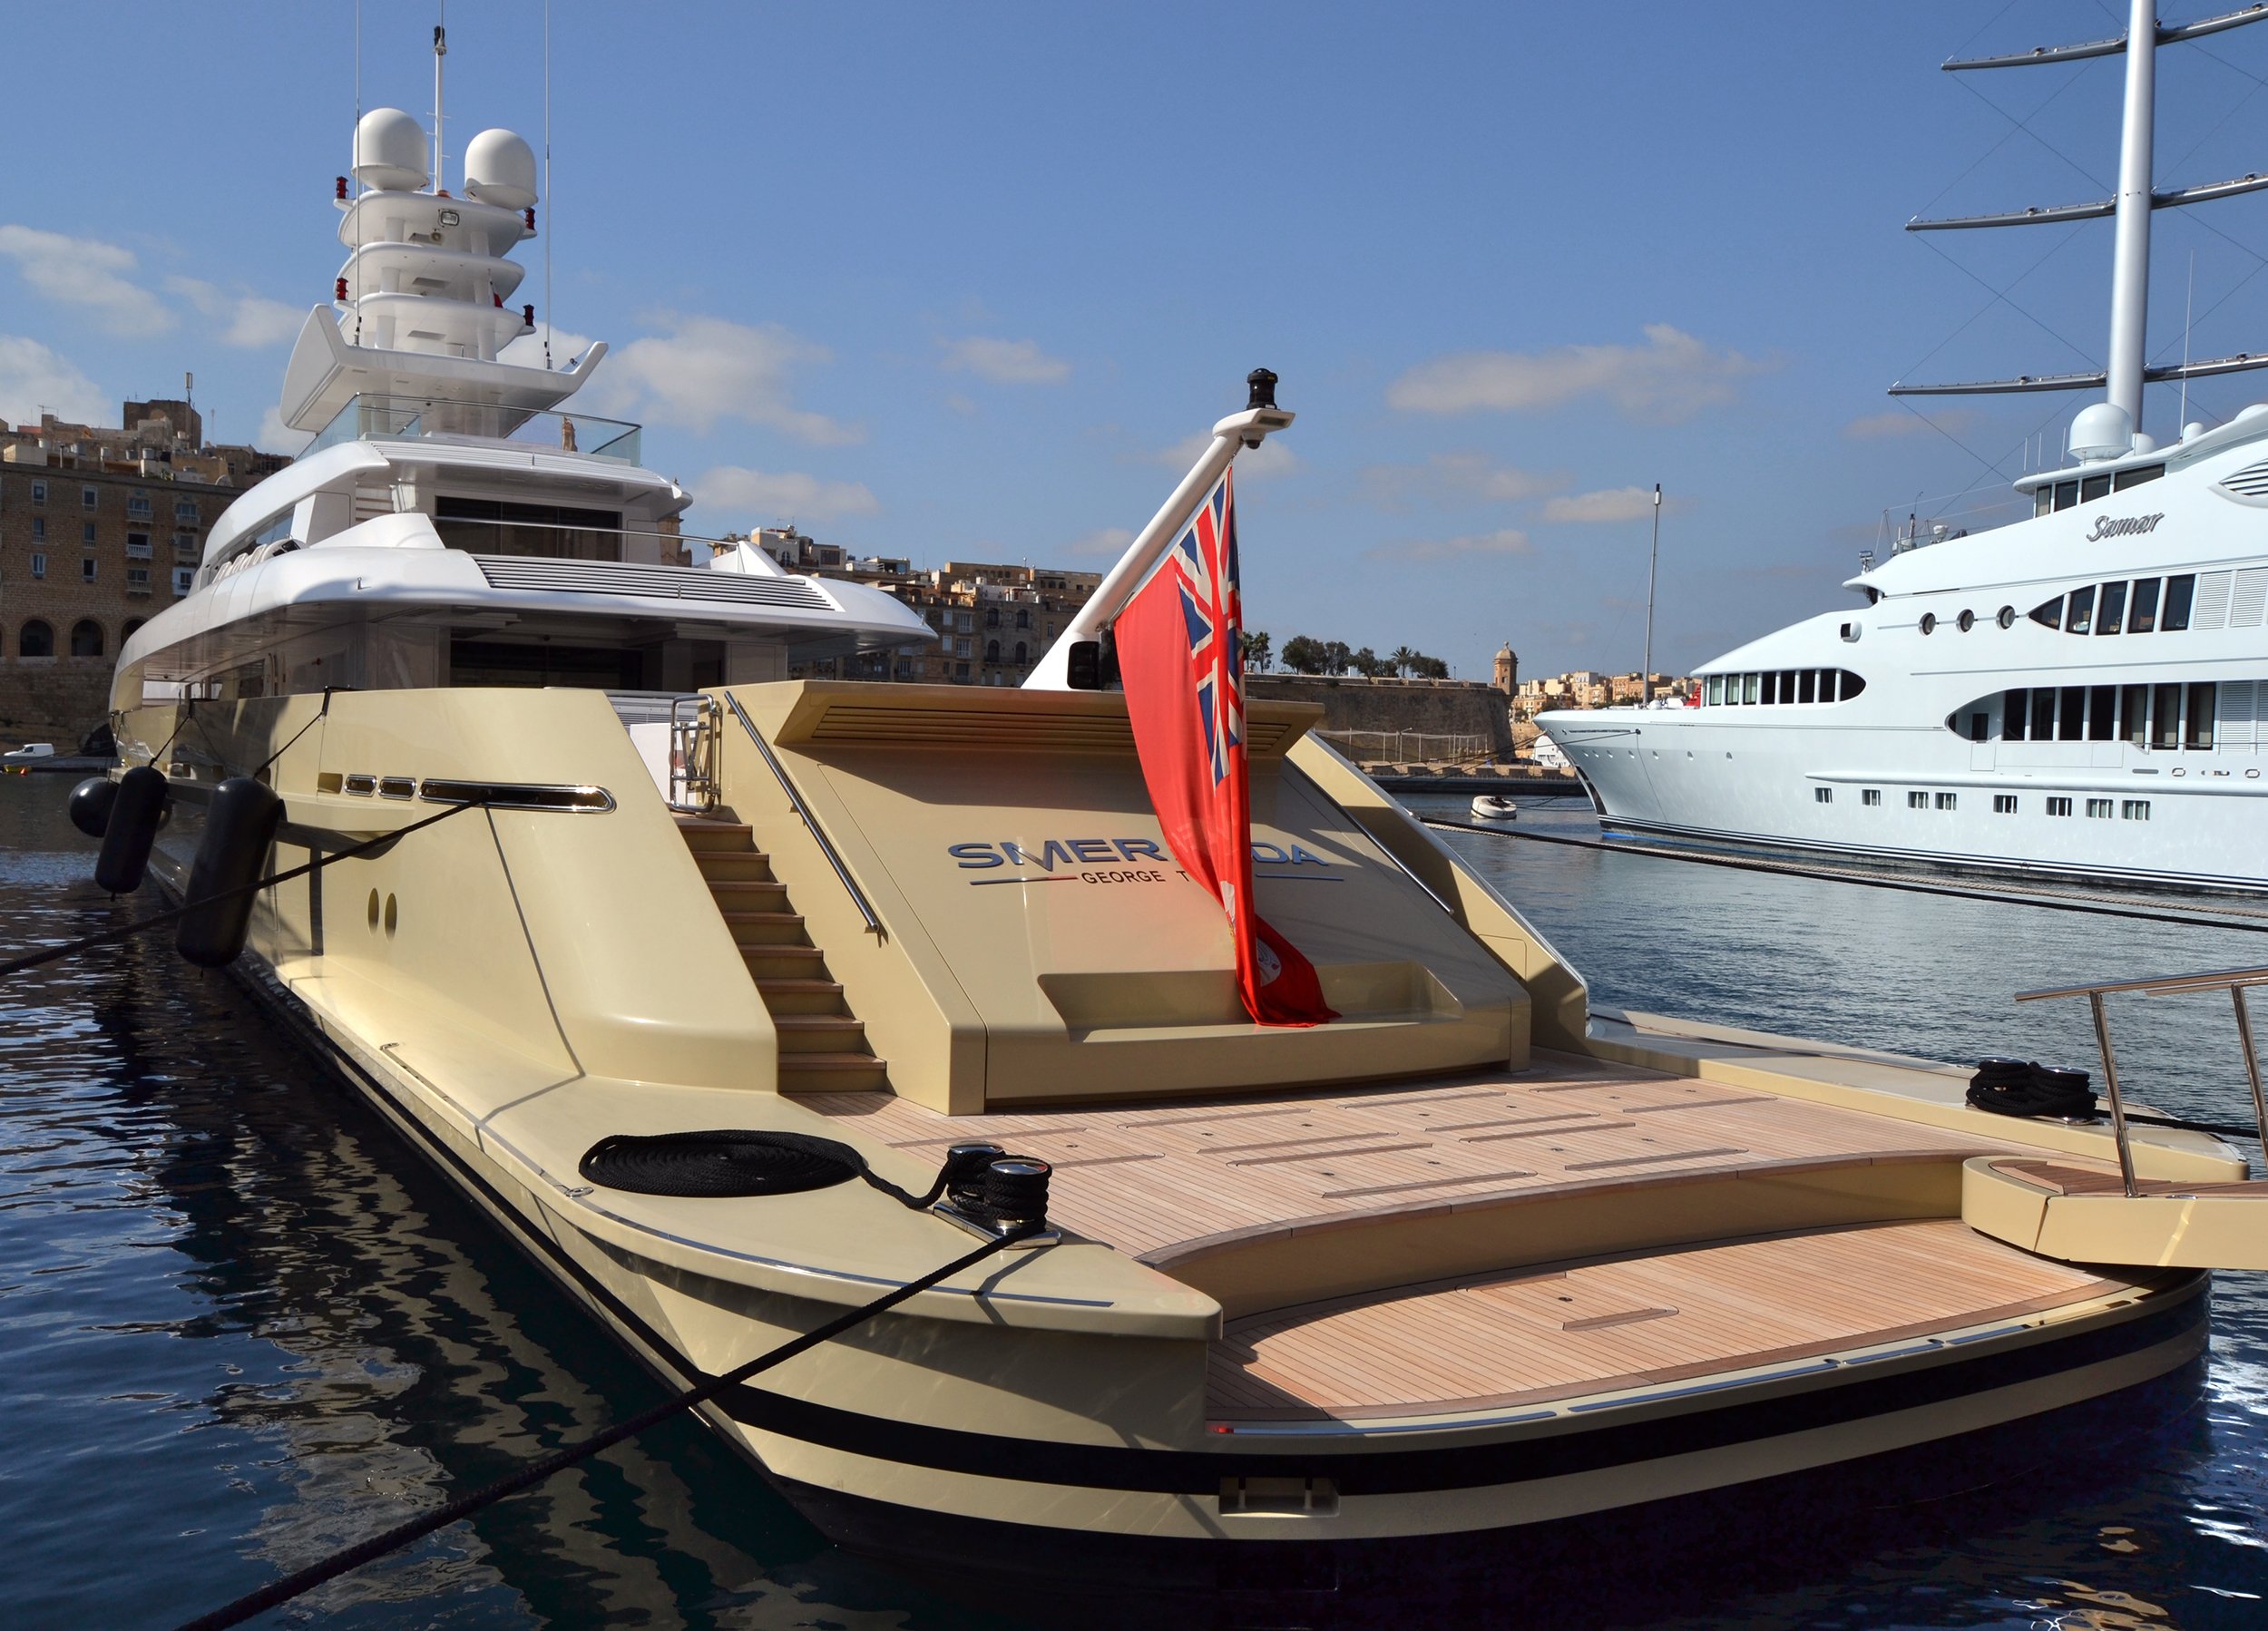 SMERALDA yacht • Silver Yachts • 2012 • owner Sheikh Hamdan